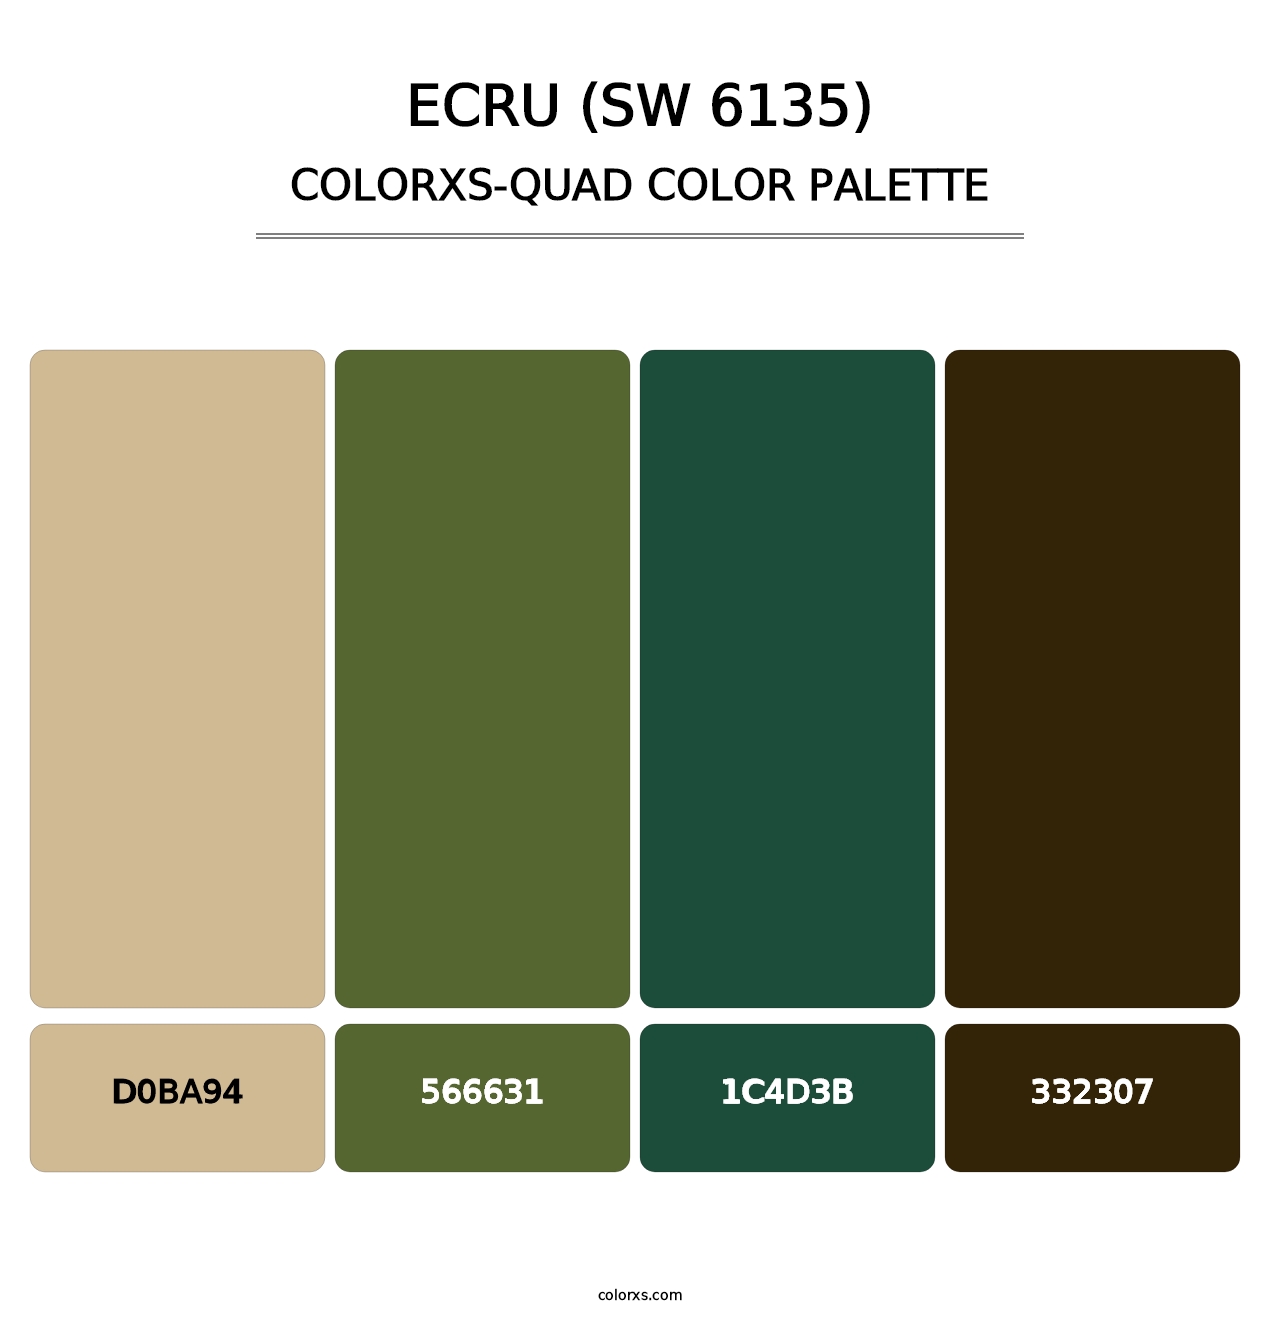 Ecru (SW 6135) - Colorxs Quad Palette